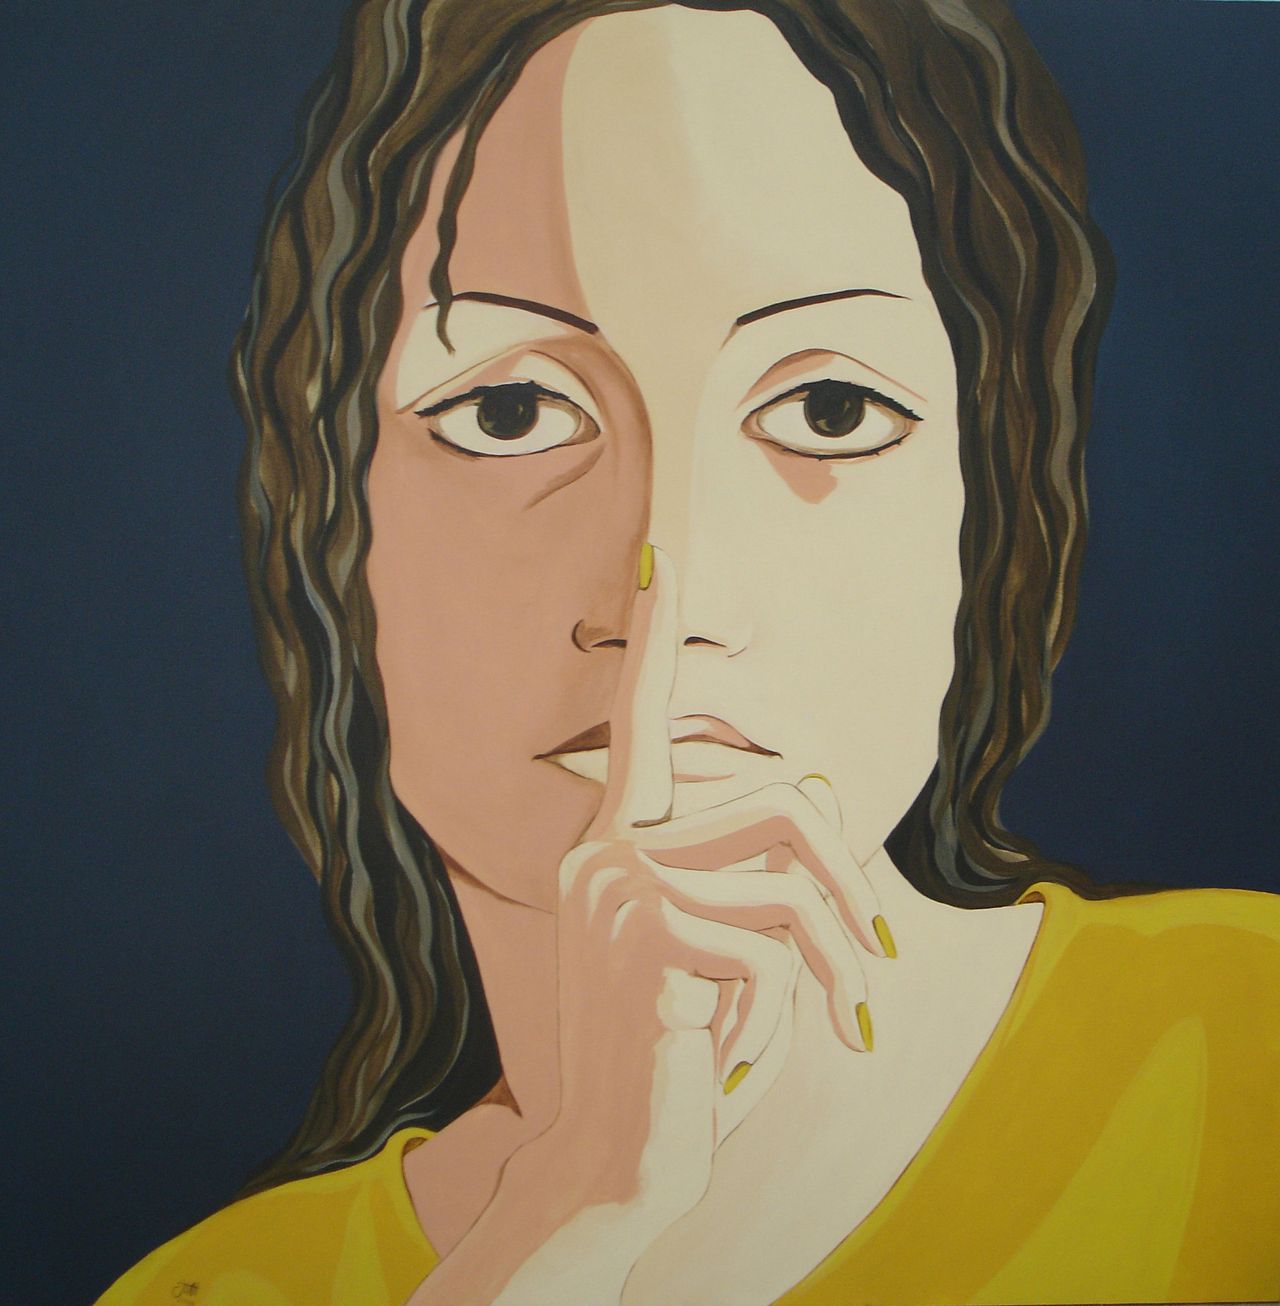 Simin Keramati. "Hush" (2008), acrylic on canvas, 59”x59”.